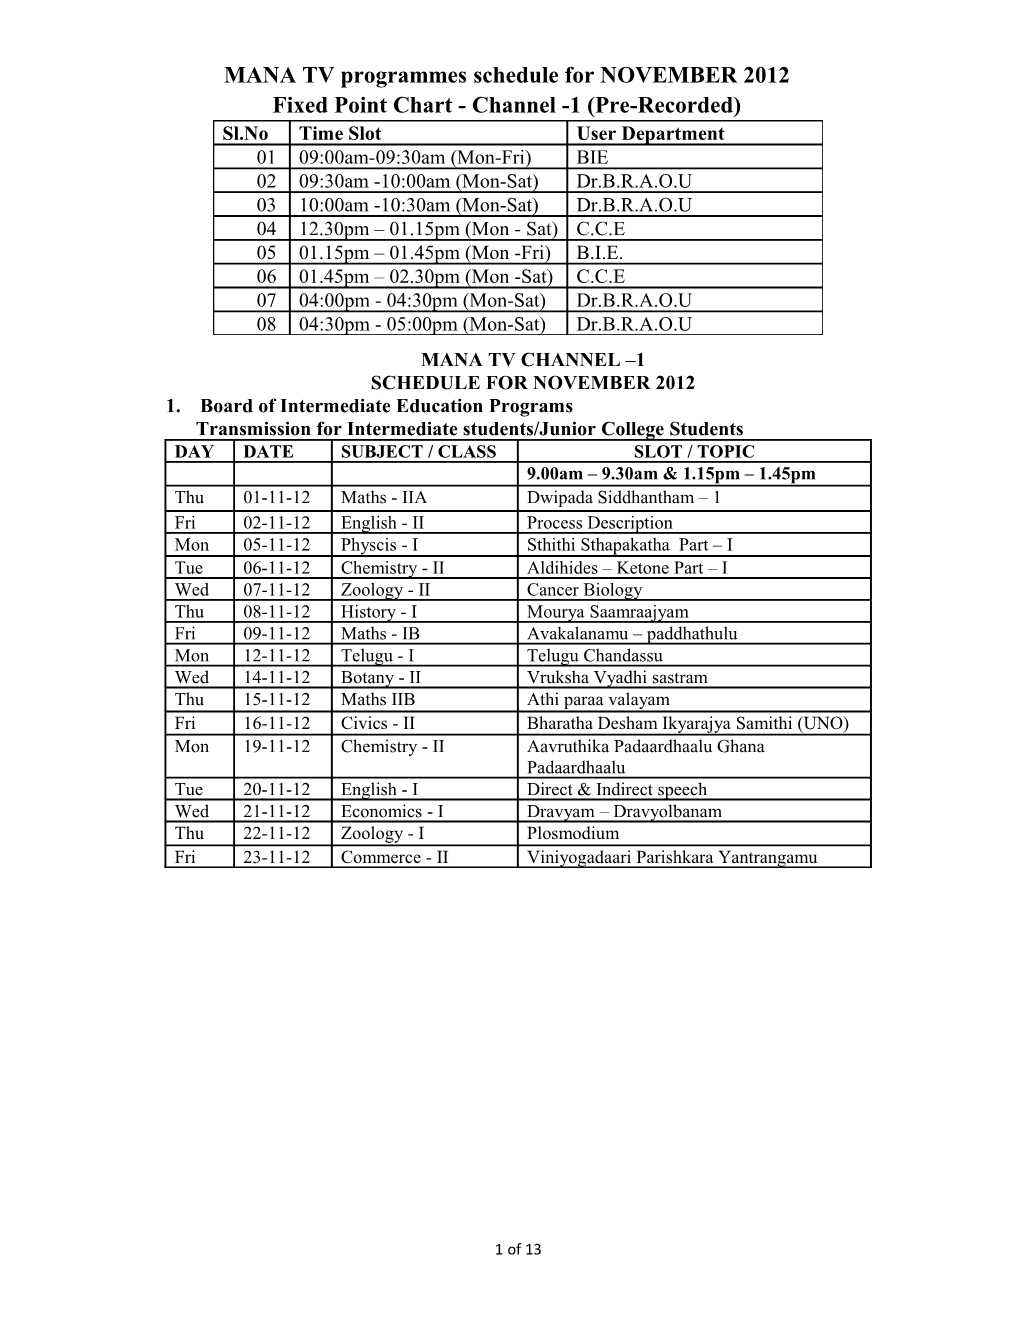 MANA TV Programmes Schedule for NOVEMBER 2012